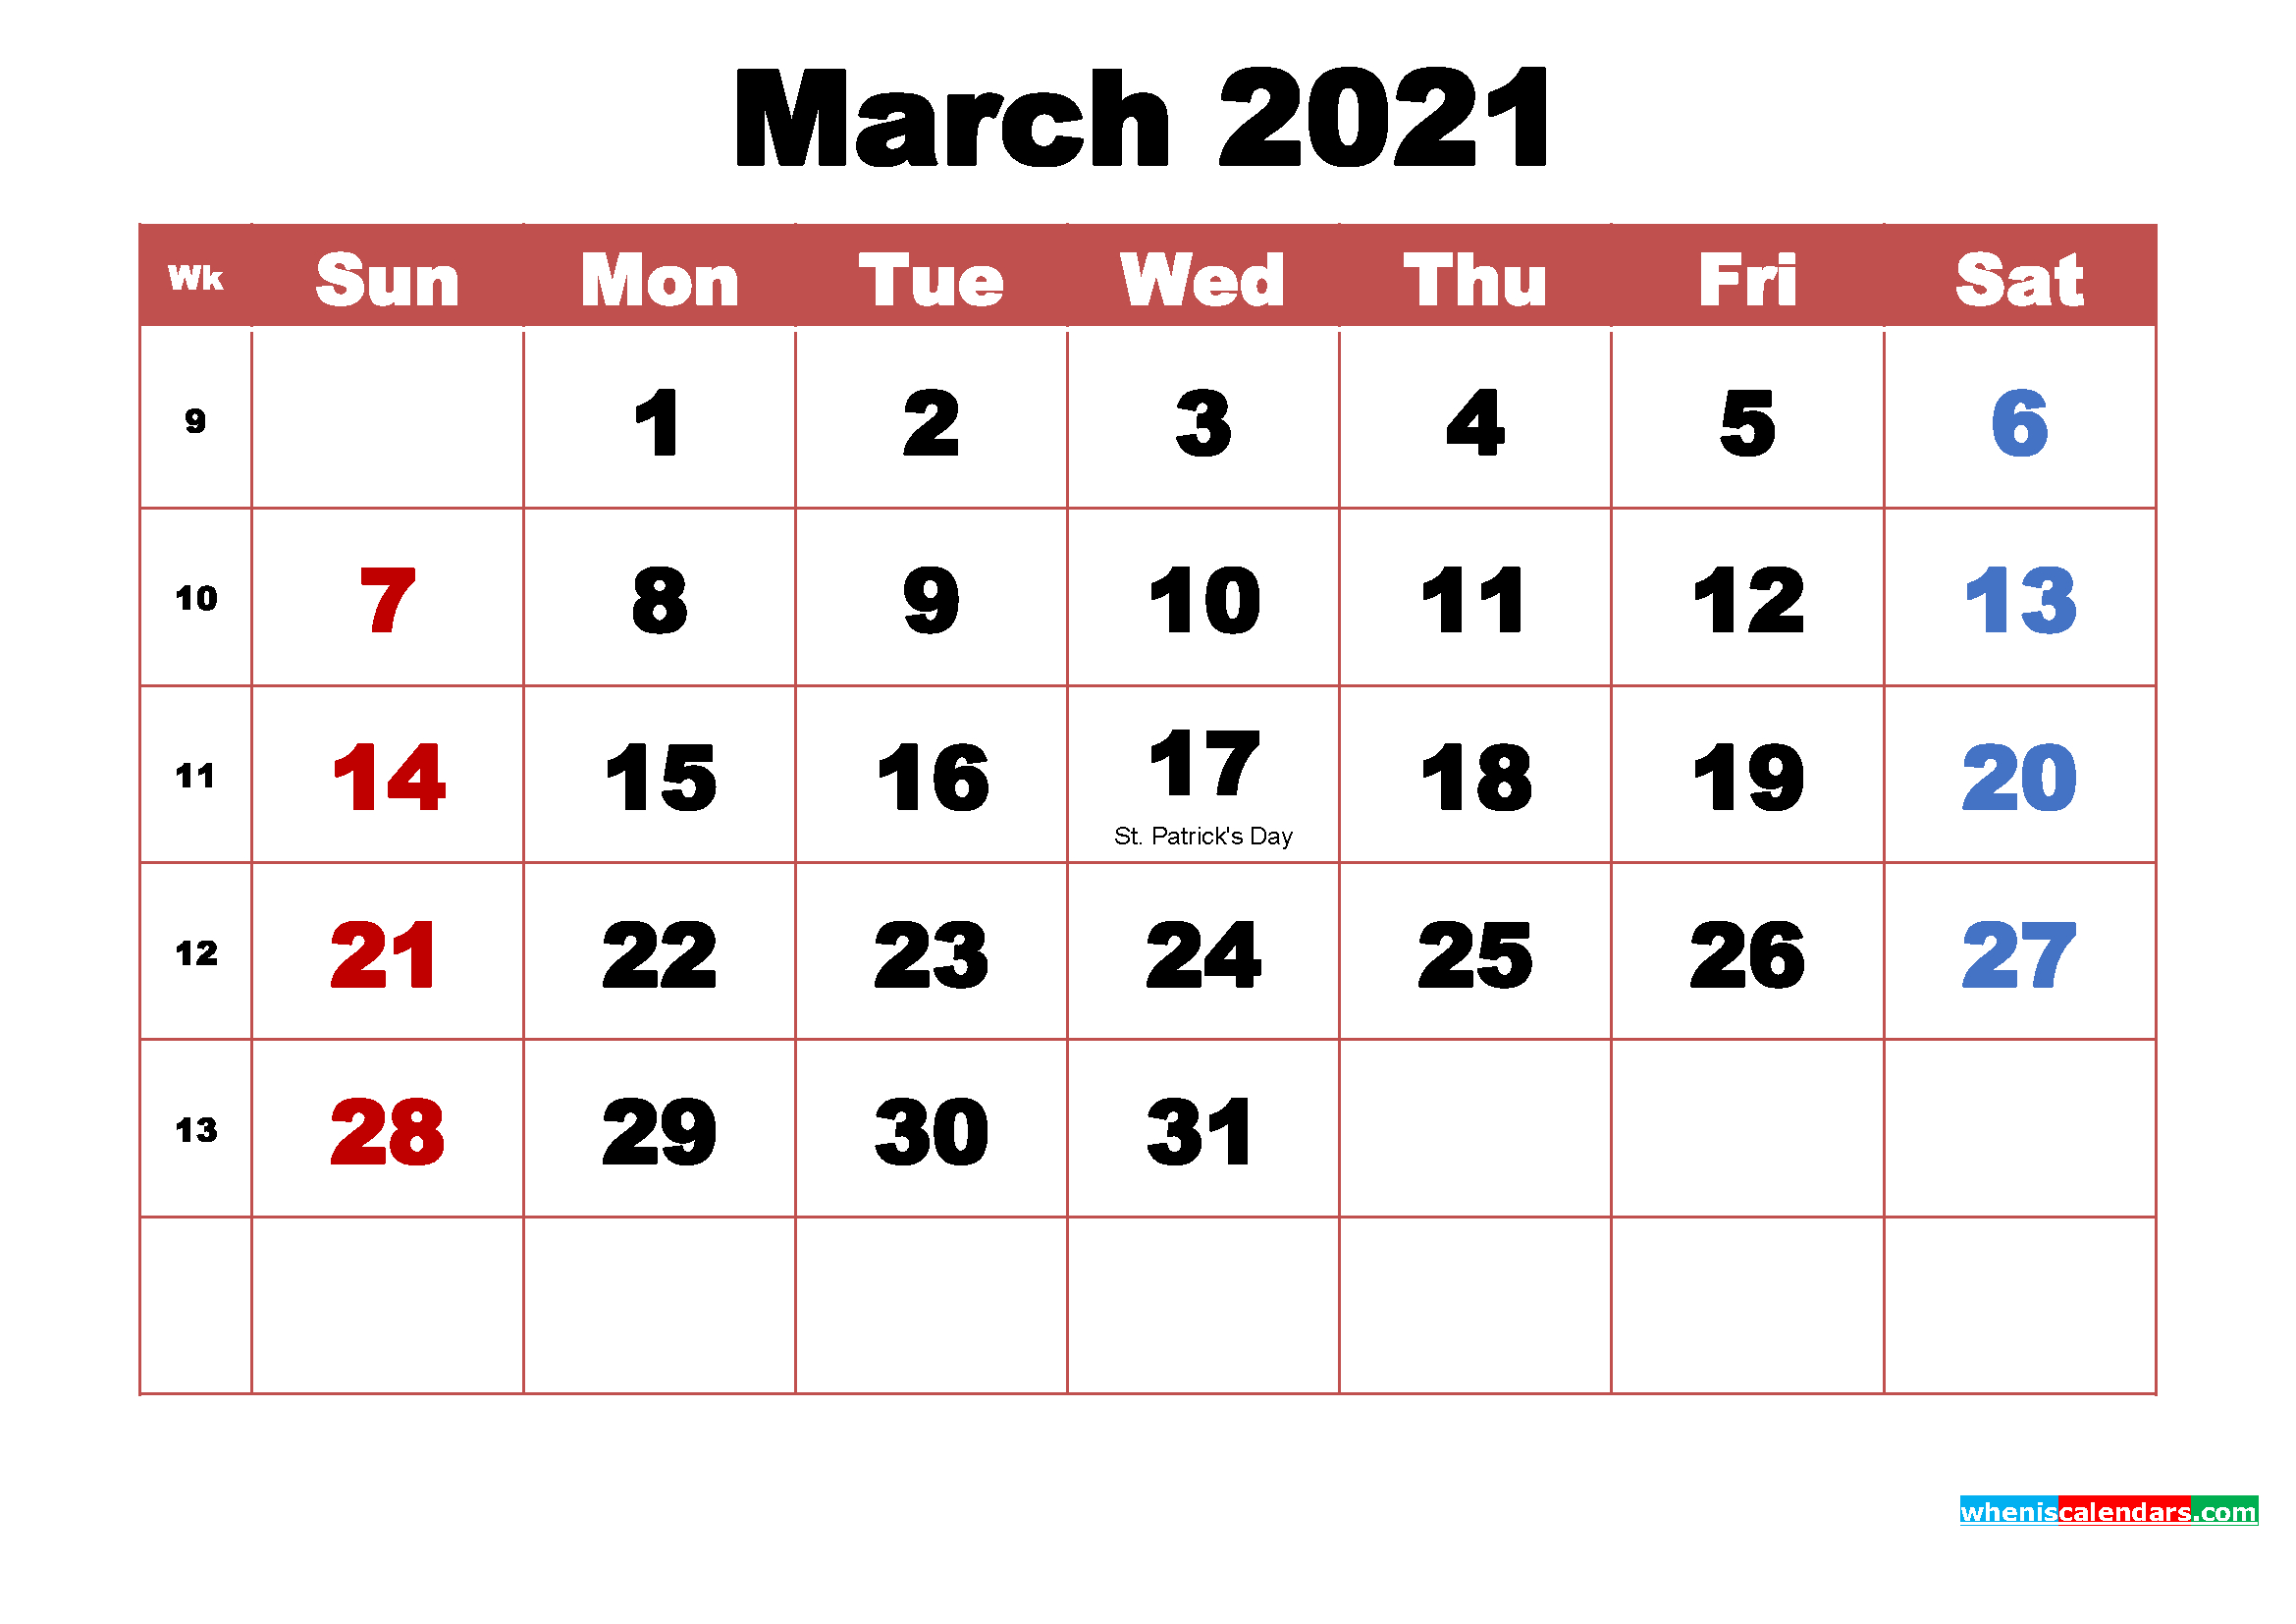 March 2021 Calendar Wallpapers - Top Free March 2021 December 2021 Calendar Printable Wiki